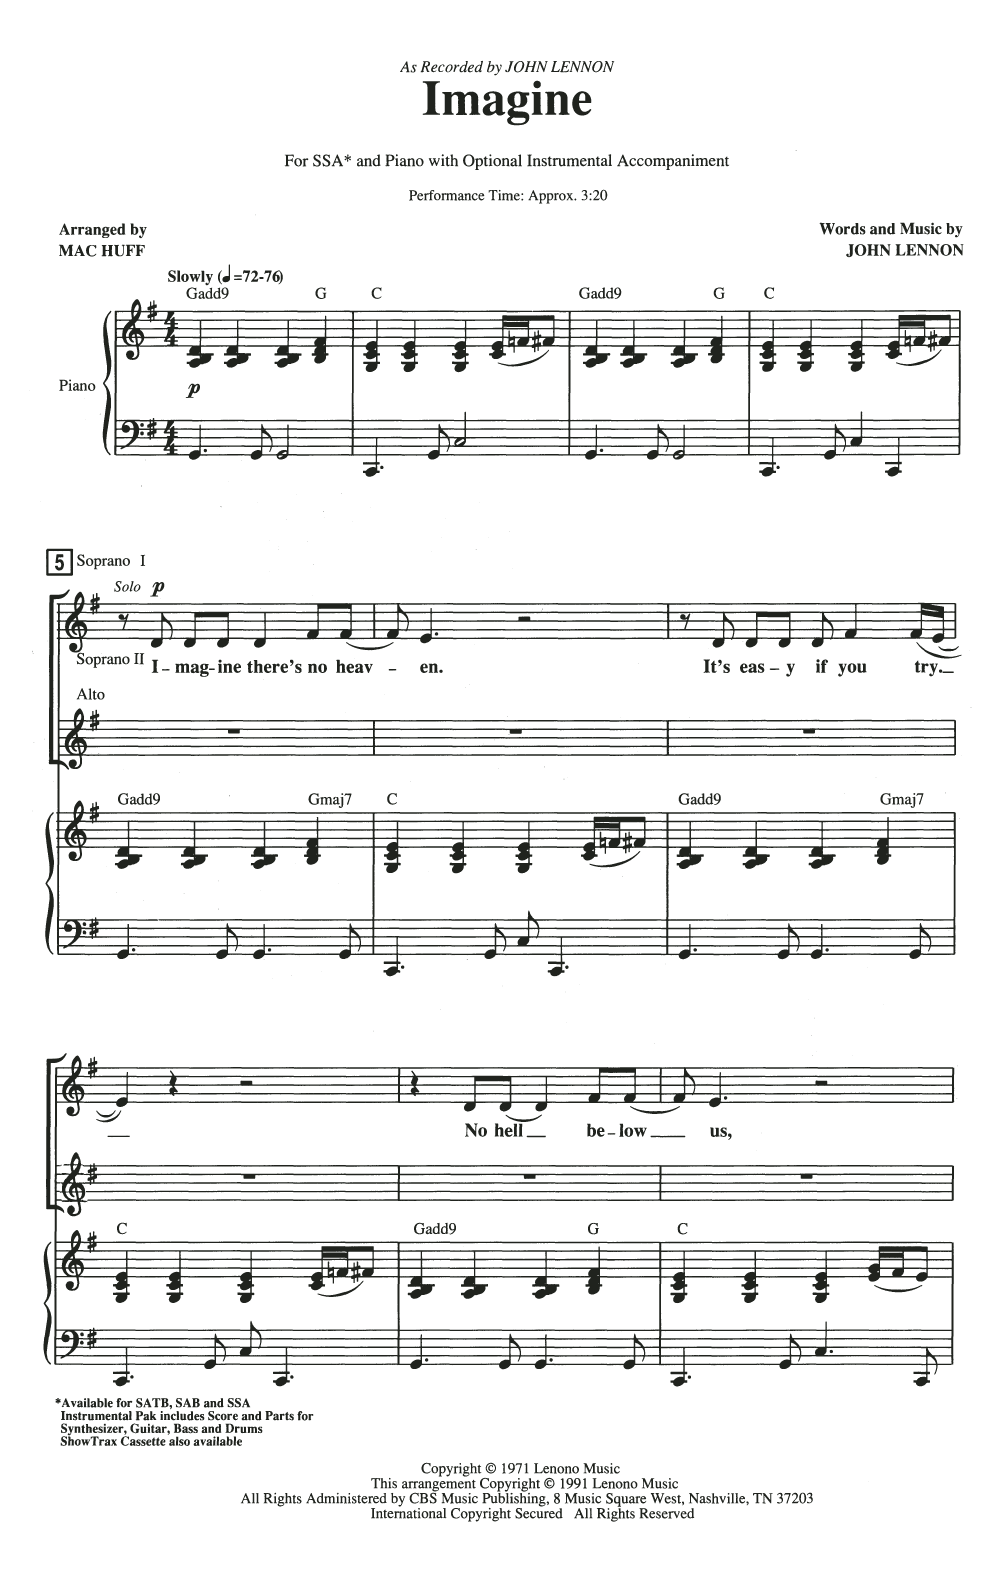 John Lennon Imagine (arr. Mac Huff) Sheet Music Notes & Chords for 2-Part Choir - Download or Print PDF